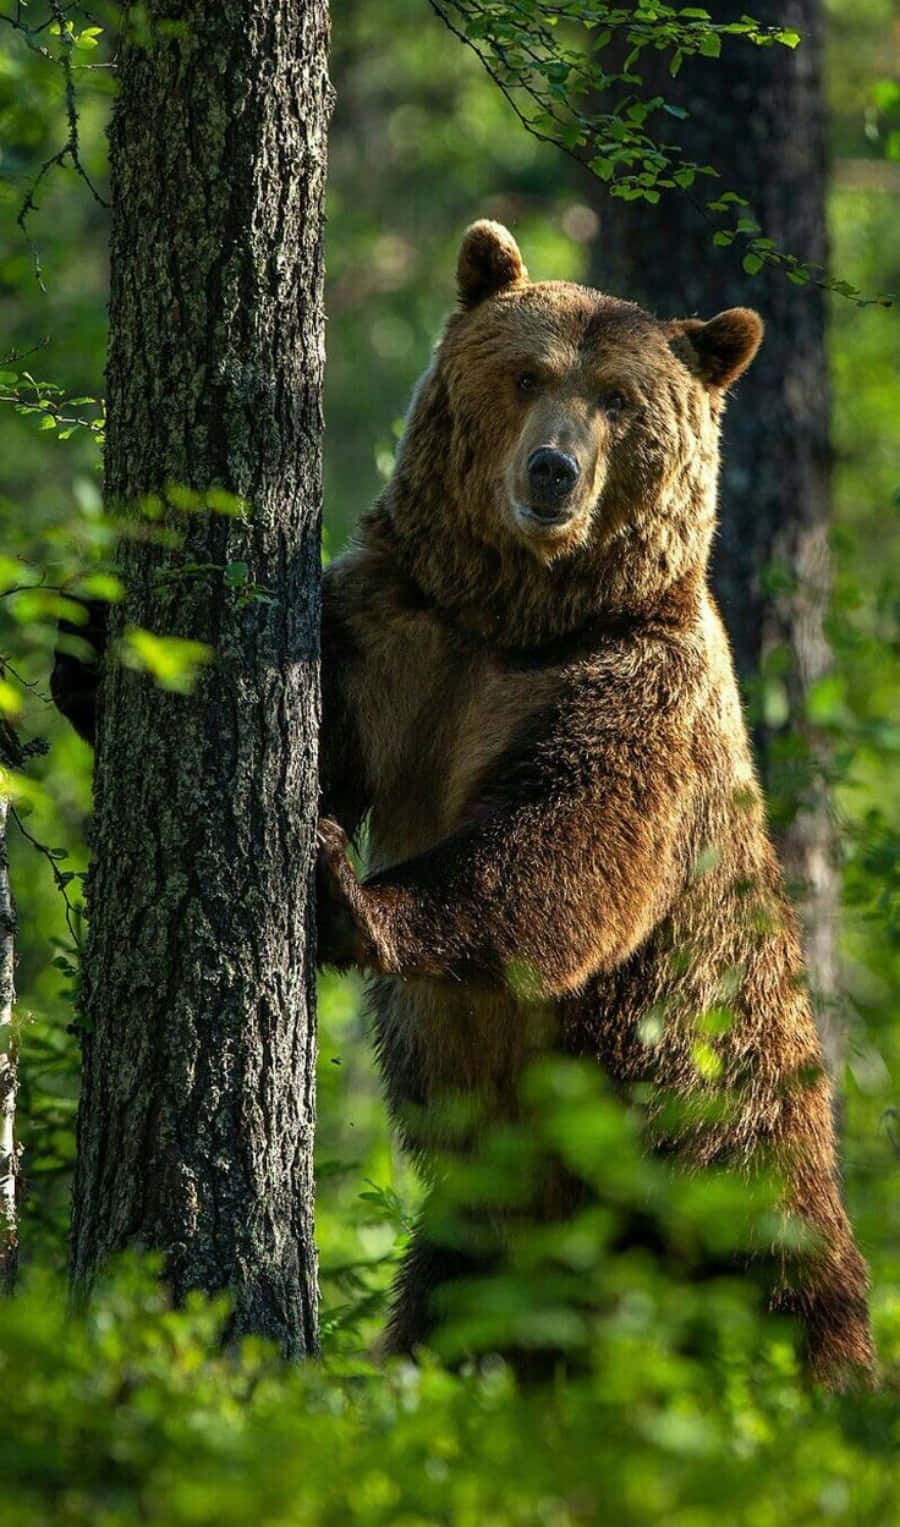 "majestic Wild Bear In Its Natural Habitat"